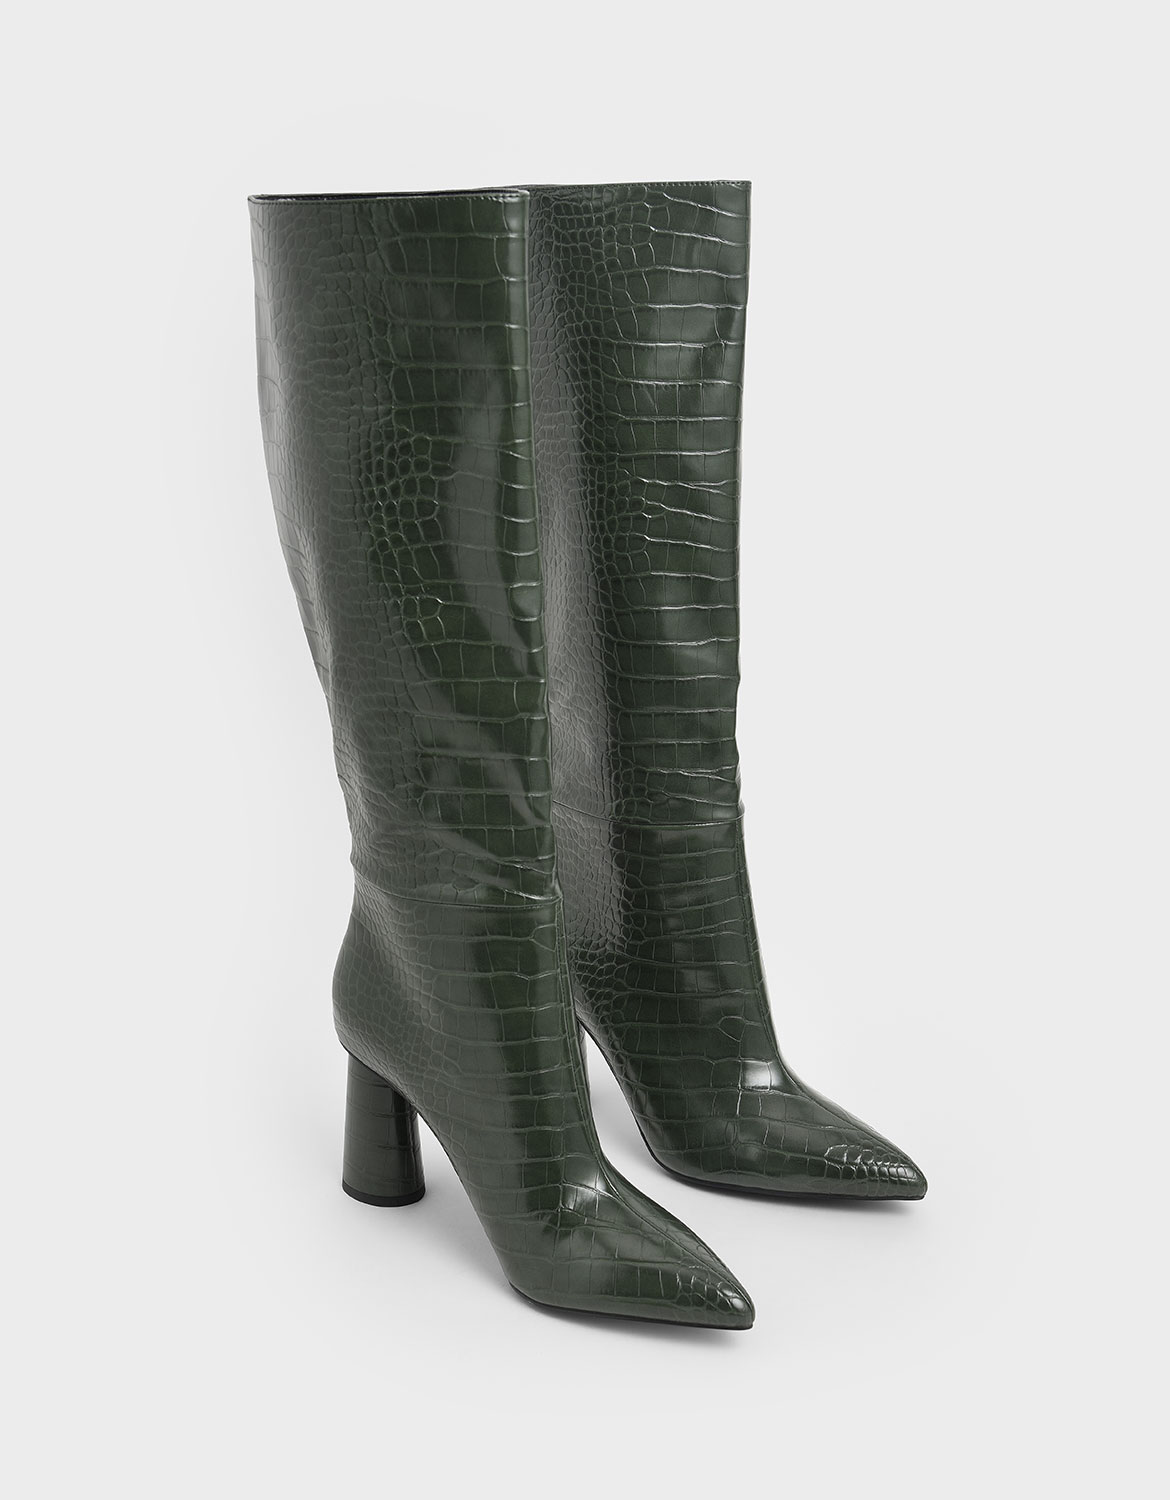 Women’s croc-effect knee high heeled boots in green